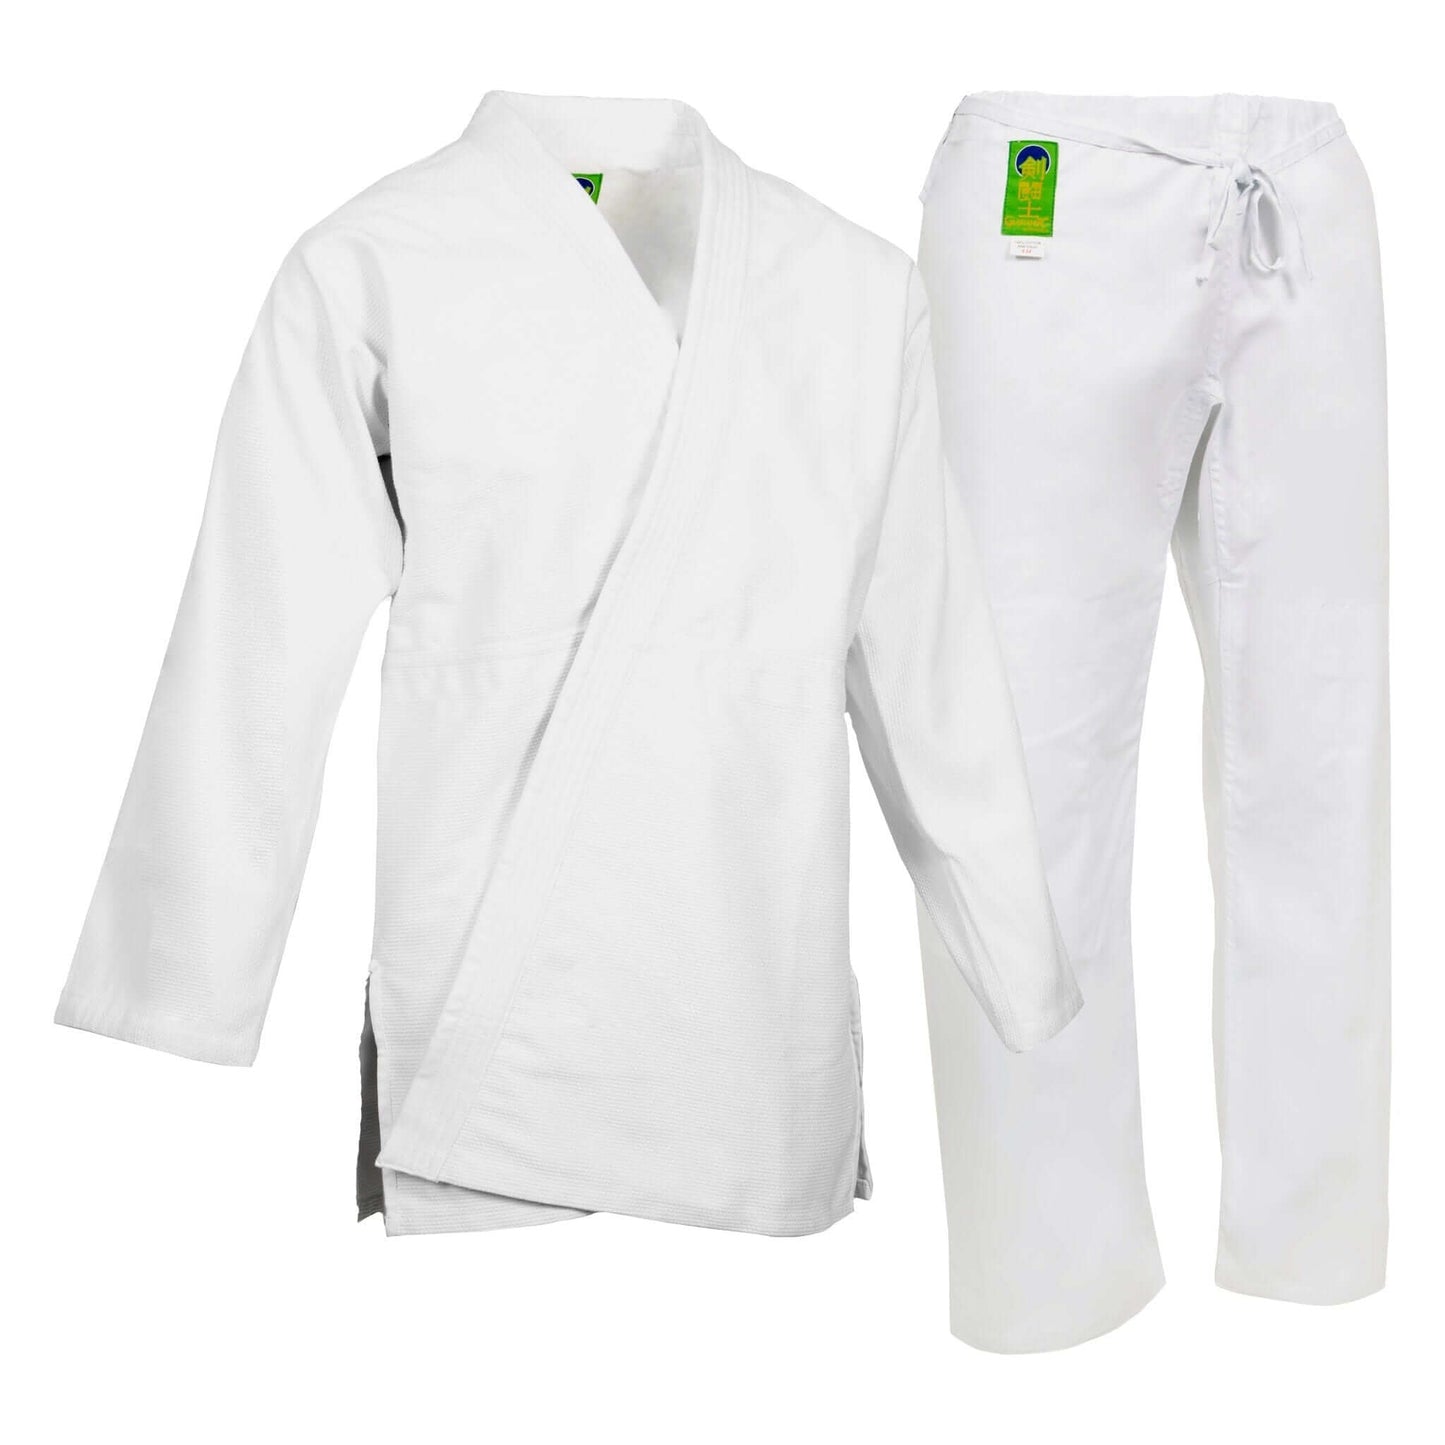 EclipseMartialArtsSupplies sporting goods White / K00 ProForce Gladiator Pearl Jiu-Jitsu Uniform